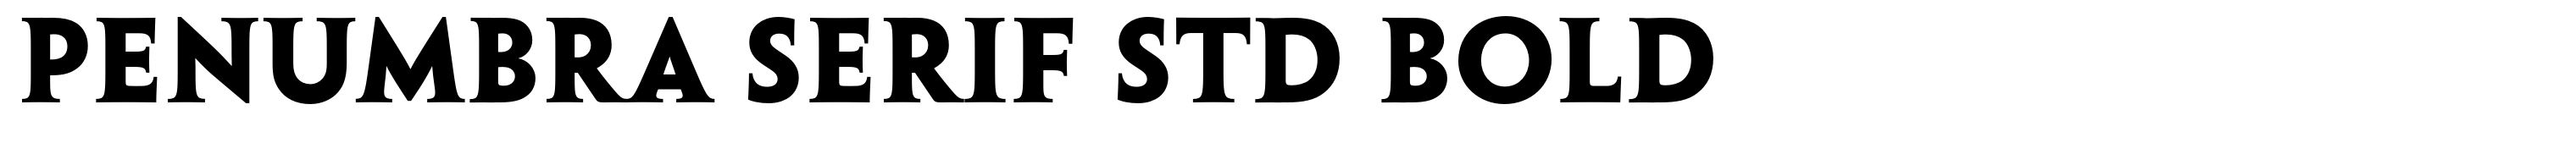 Penumbra Serif Std Bold